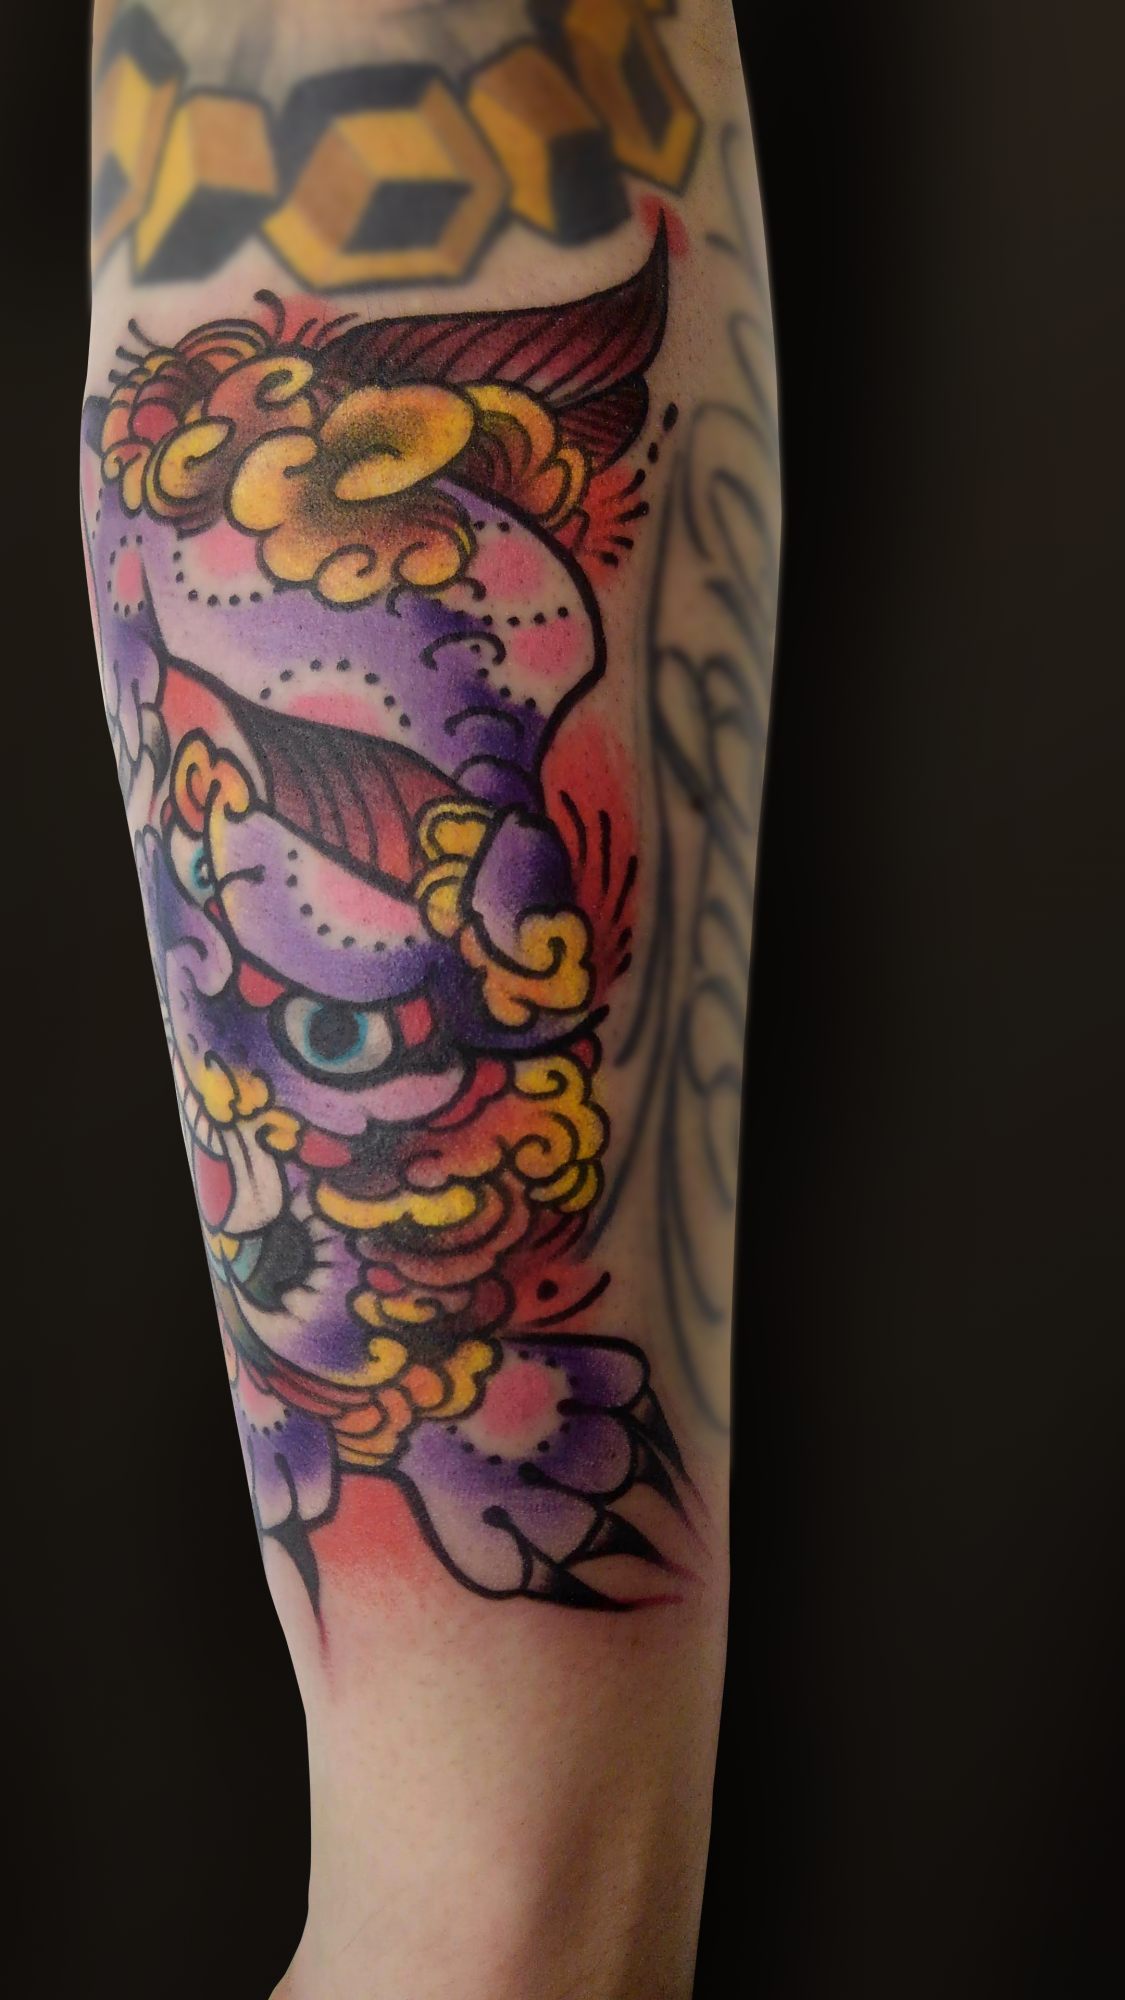 KINGRAT TATTOO 作品 | LAVA gallery | Tattoo artist: Yuji Anai | キングラット | ラバギャラリー | タトゥーアート | 福岡県北九州市 | krt_color_154